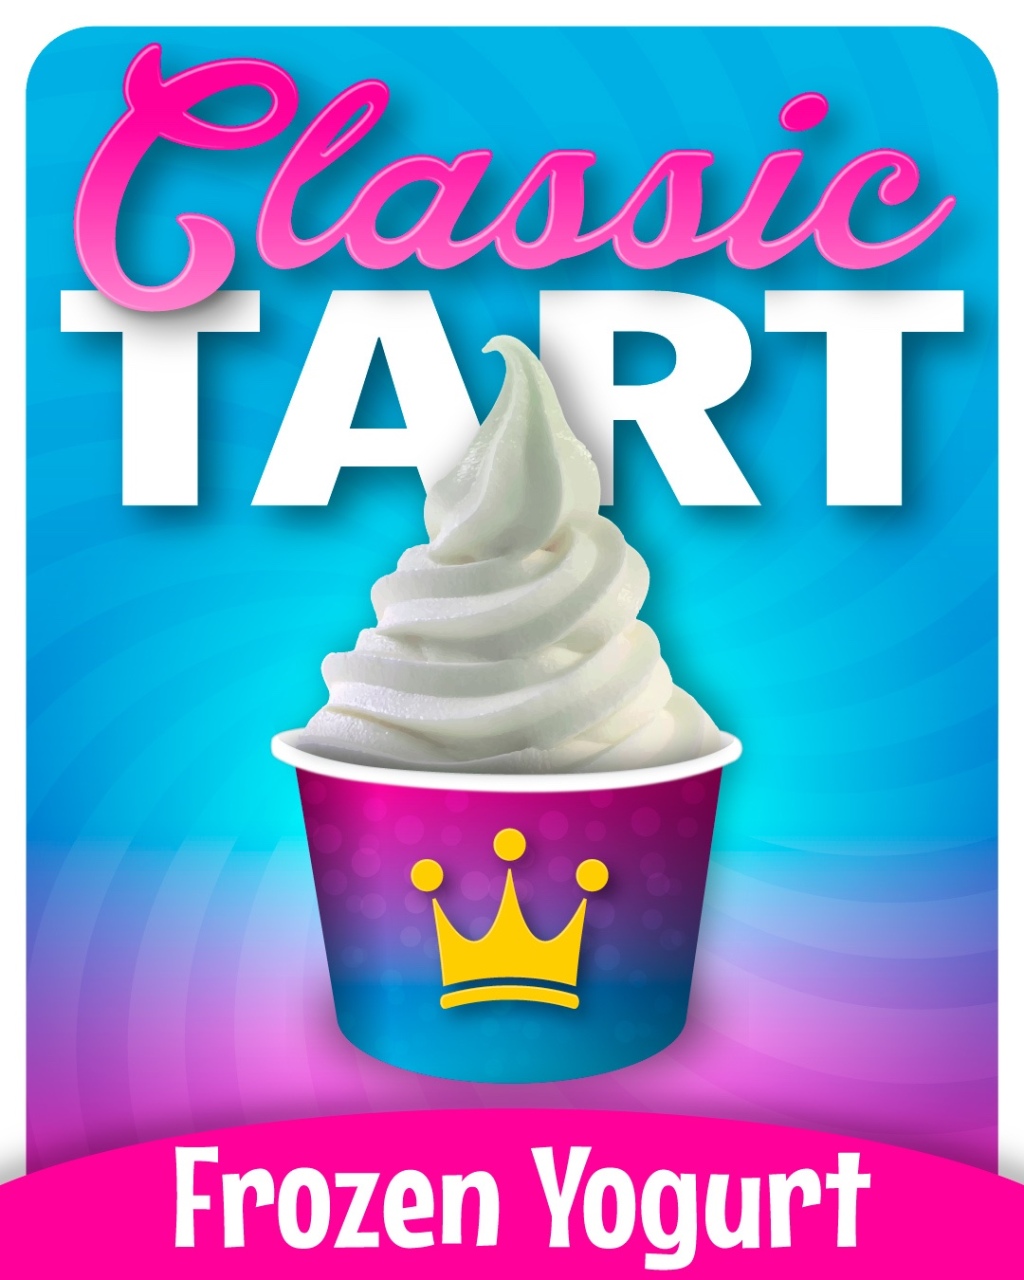 Cool King® “Classic Tart” Frozen Yogurt